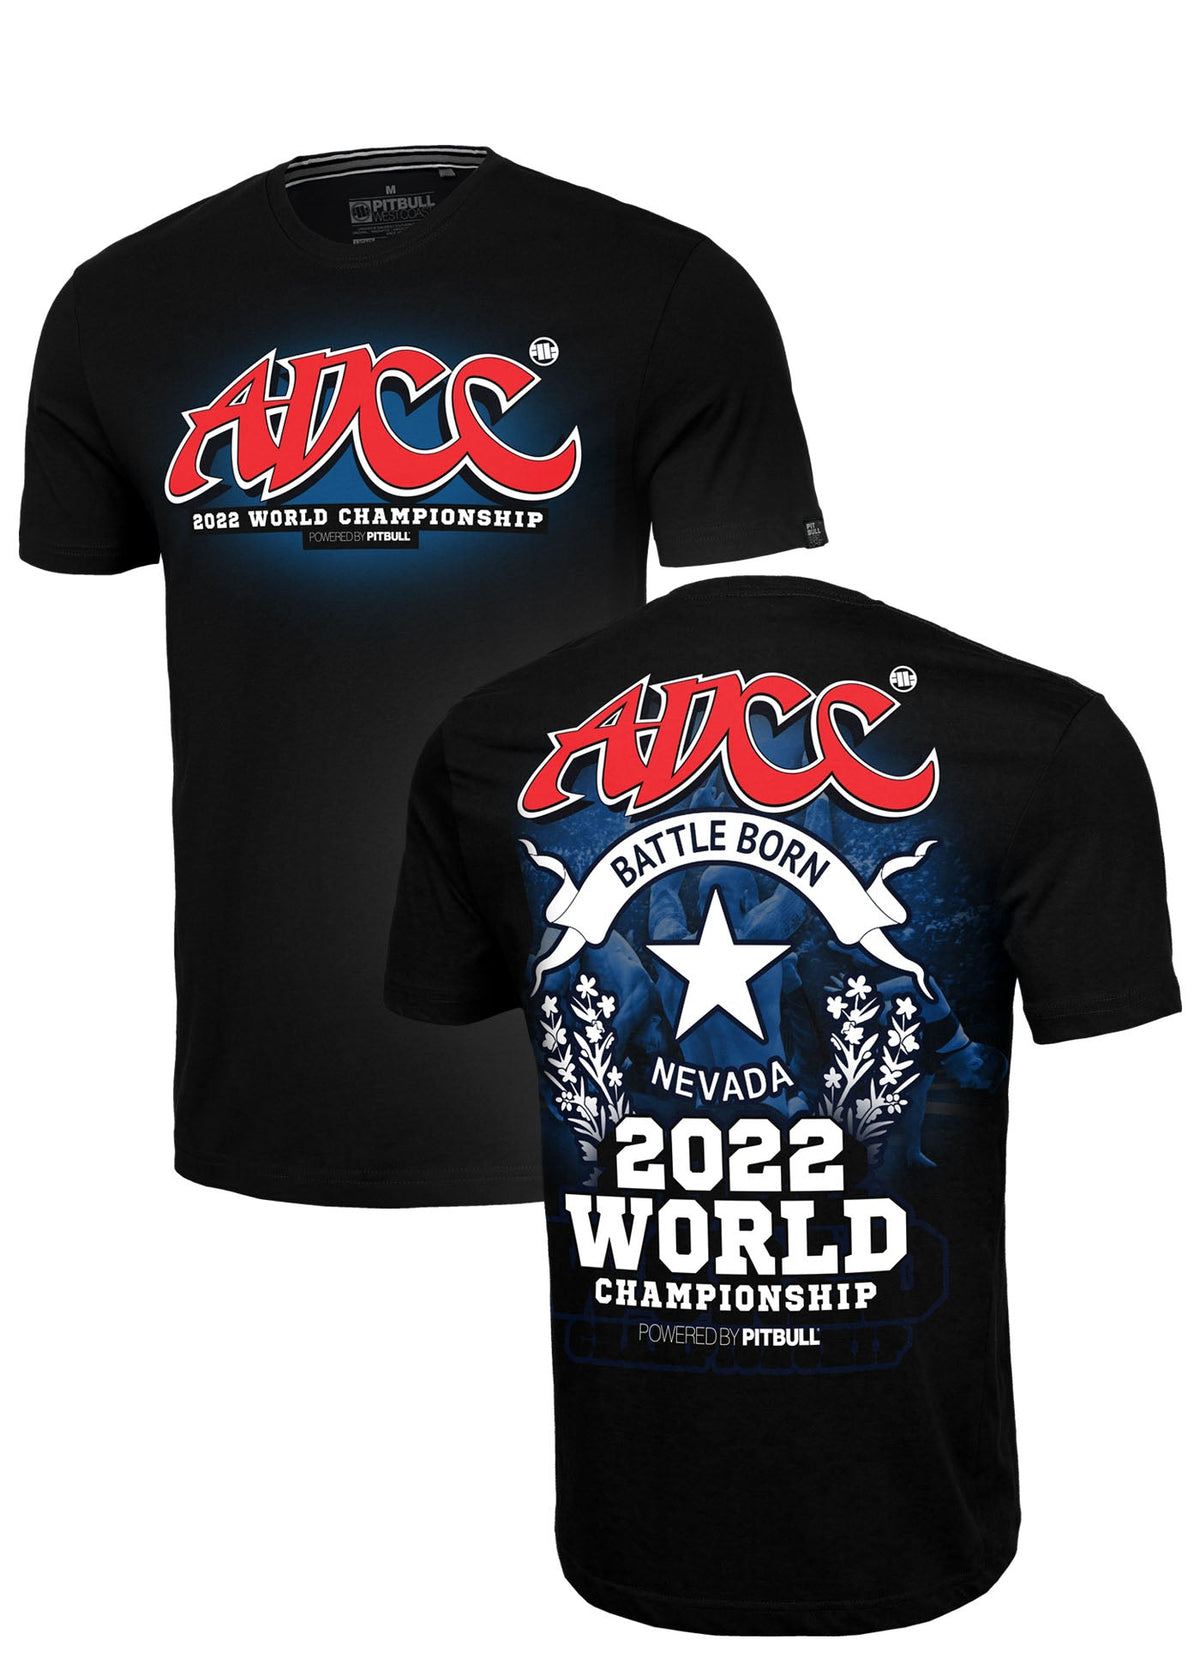 ADCC CHAMPIONSHIP 2022 NEVADA Black T-shirt